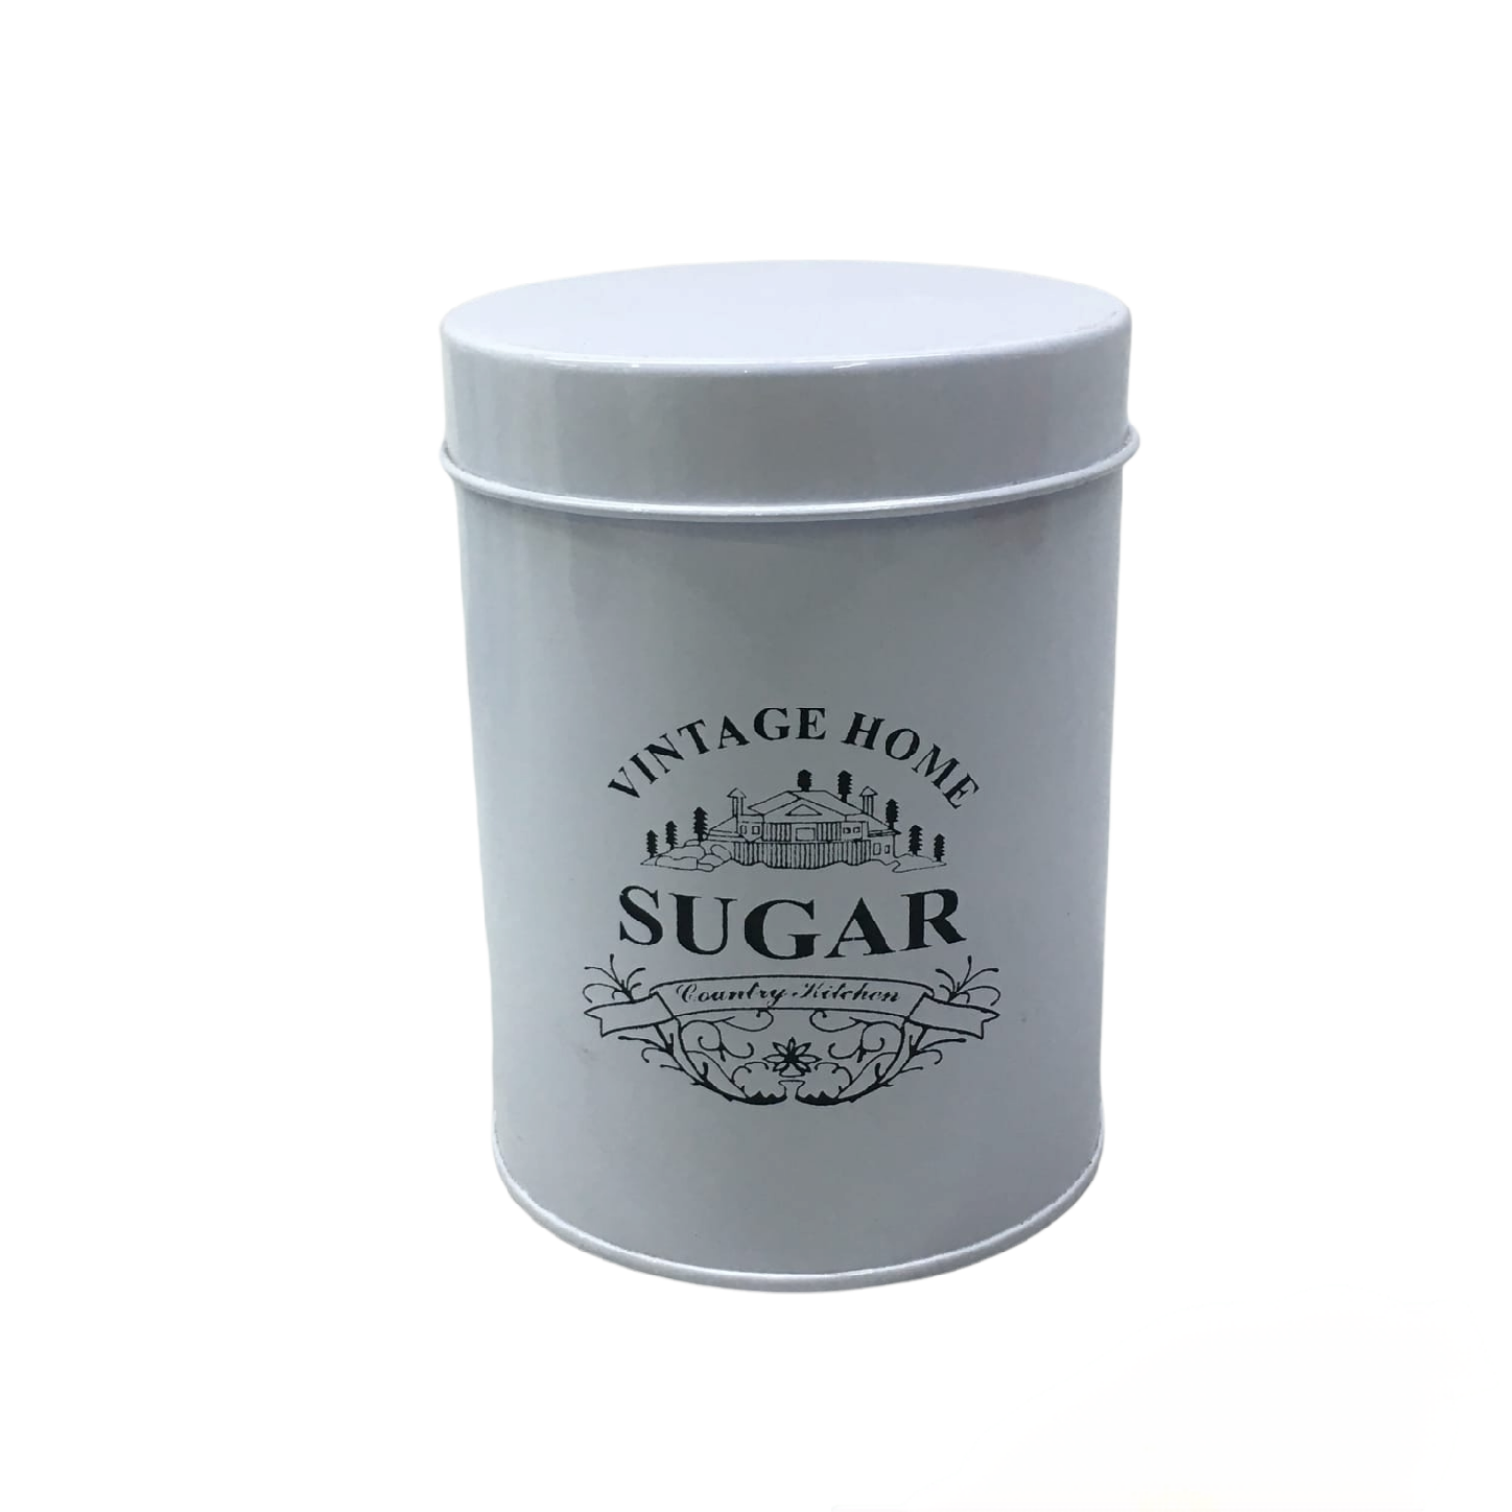 Vintage Tin Sugar Canister White 10x13.5cm